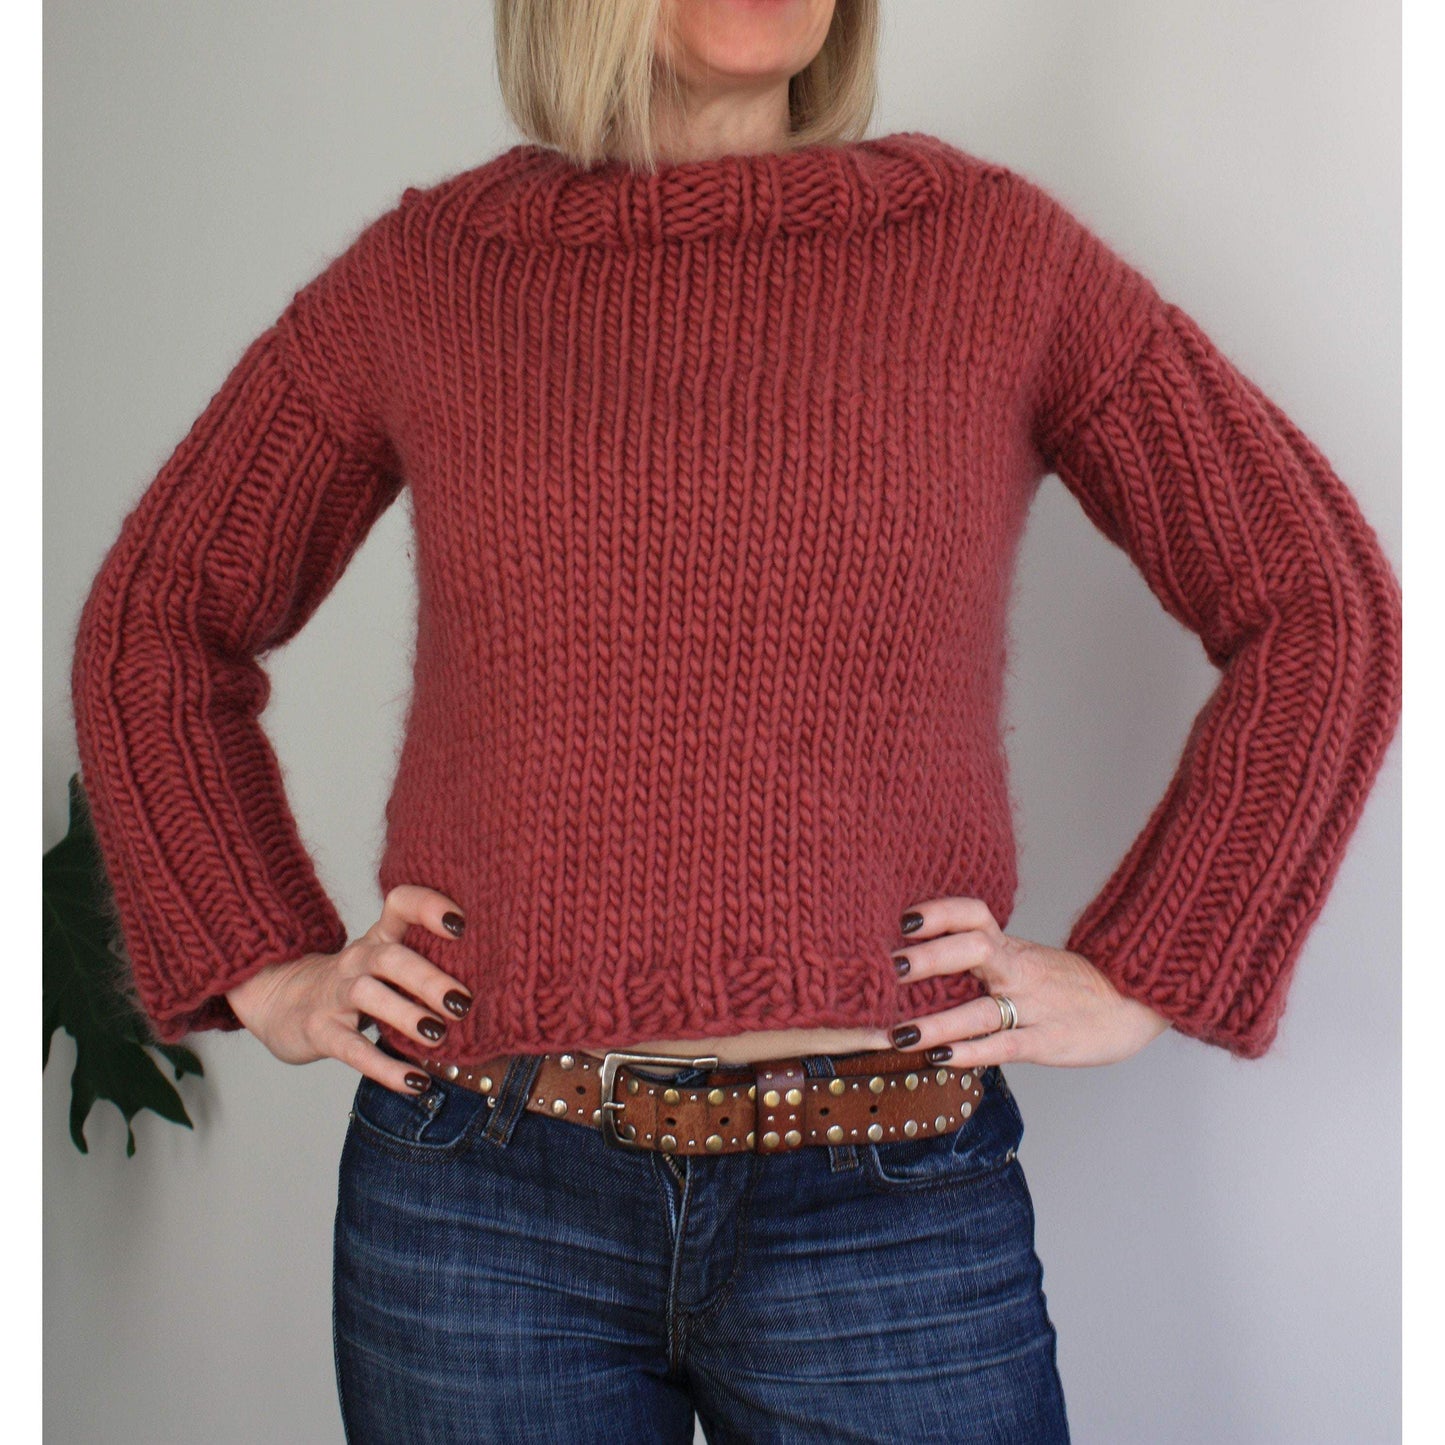 Easy Knitting Pattern - Railway Sleeve Cropped Sweater - King & Eye